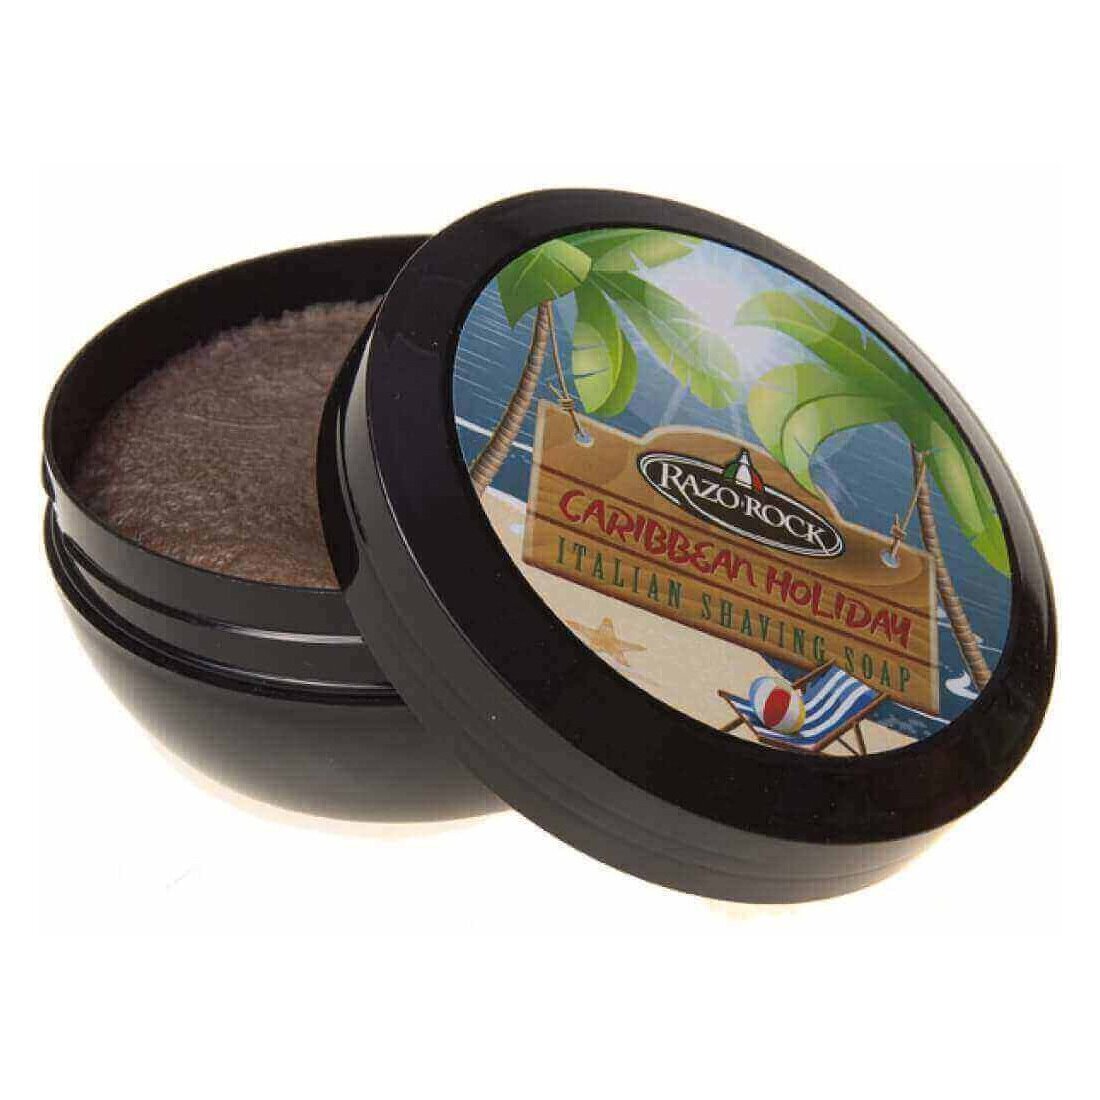 Razorock Caribbean Holyday Shaving Soap 150Ml 